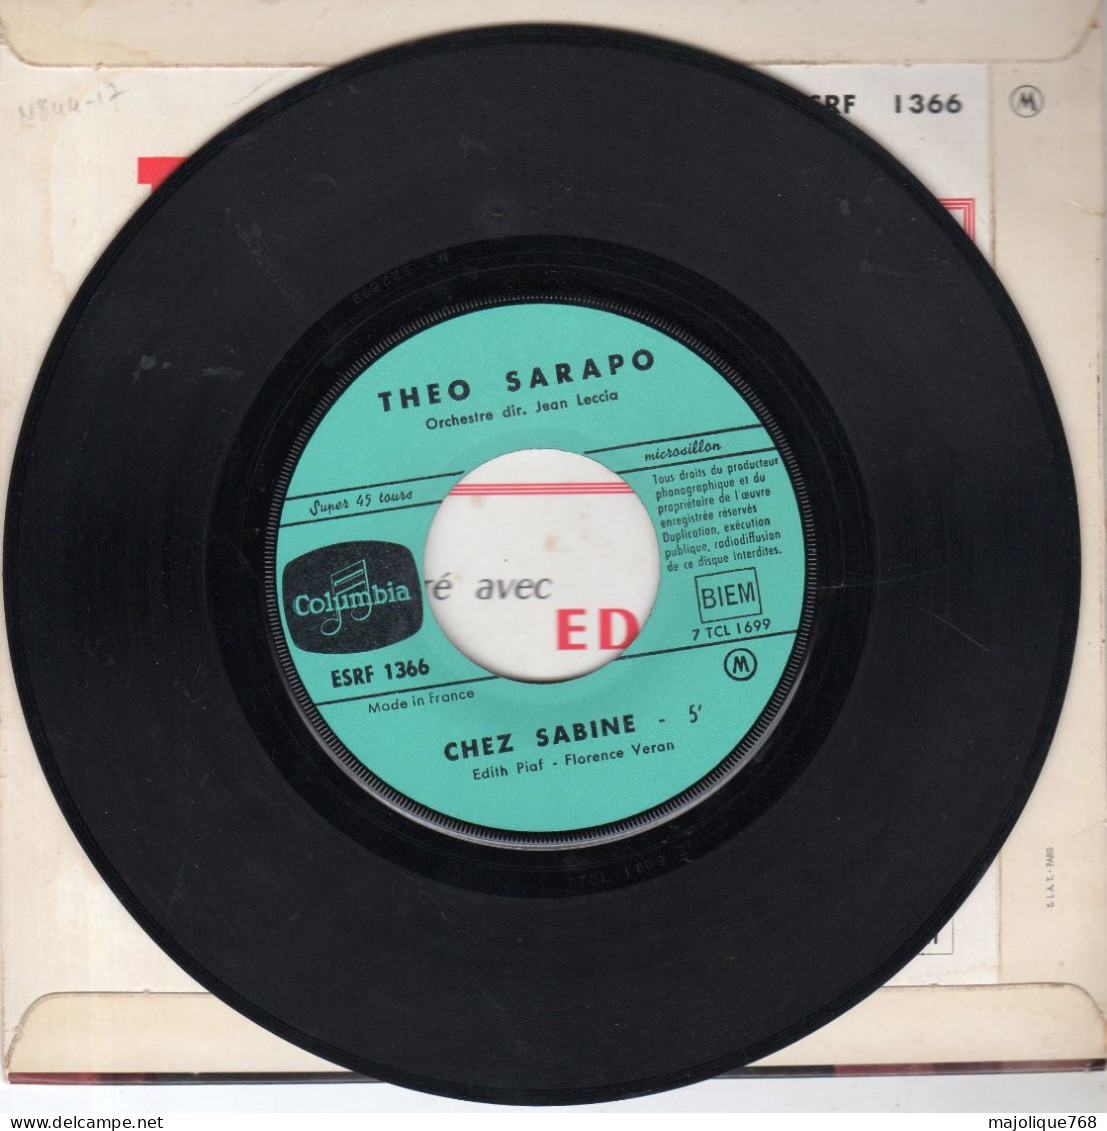 Disque De Théo Sarapo - Pour Qui Tu T'prends - Columbia ESRF 1366 - France 1962 - Disco, Pop